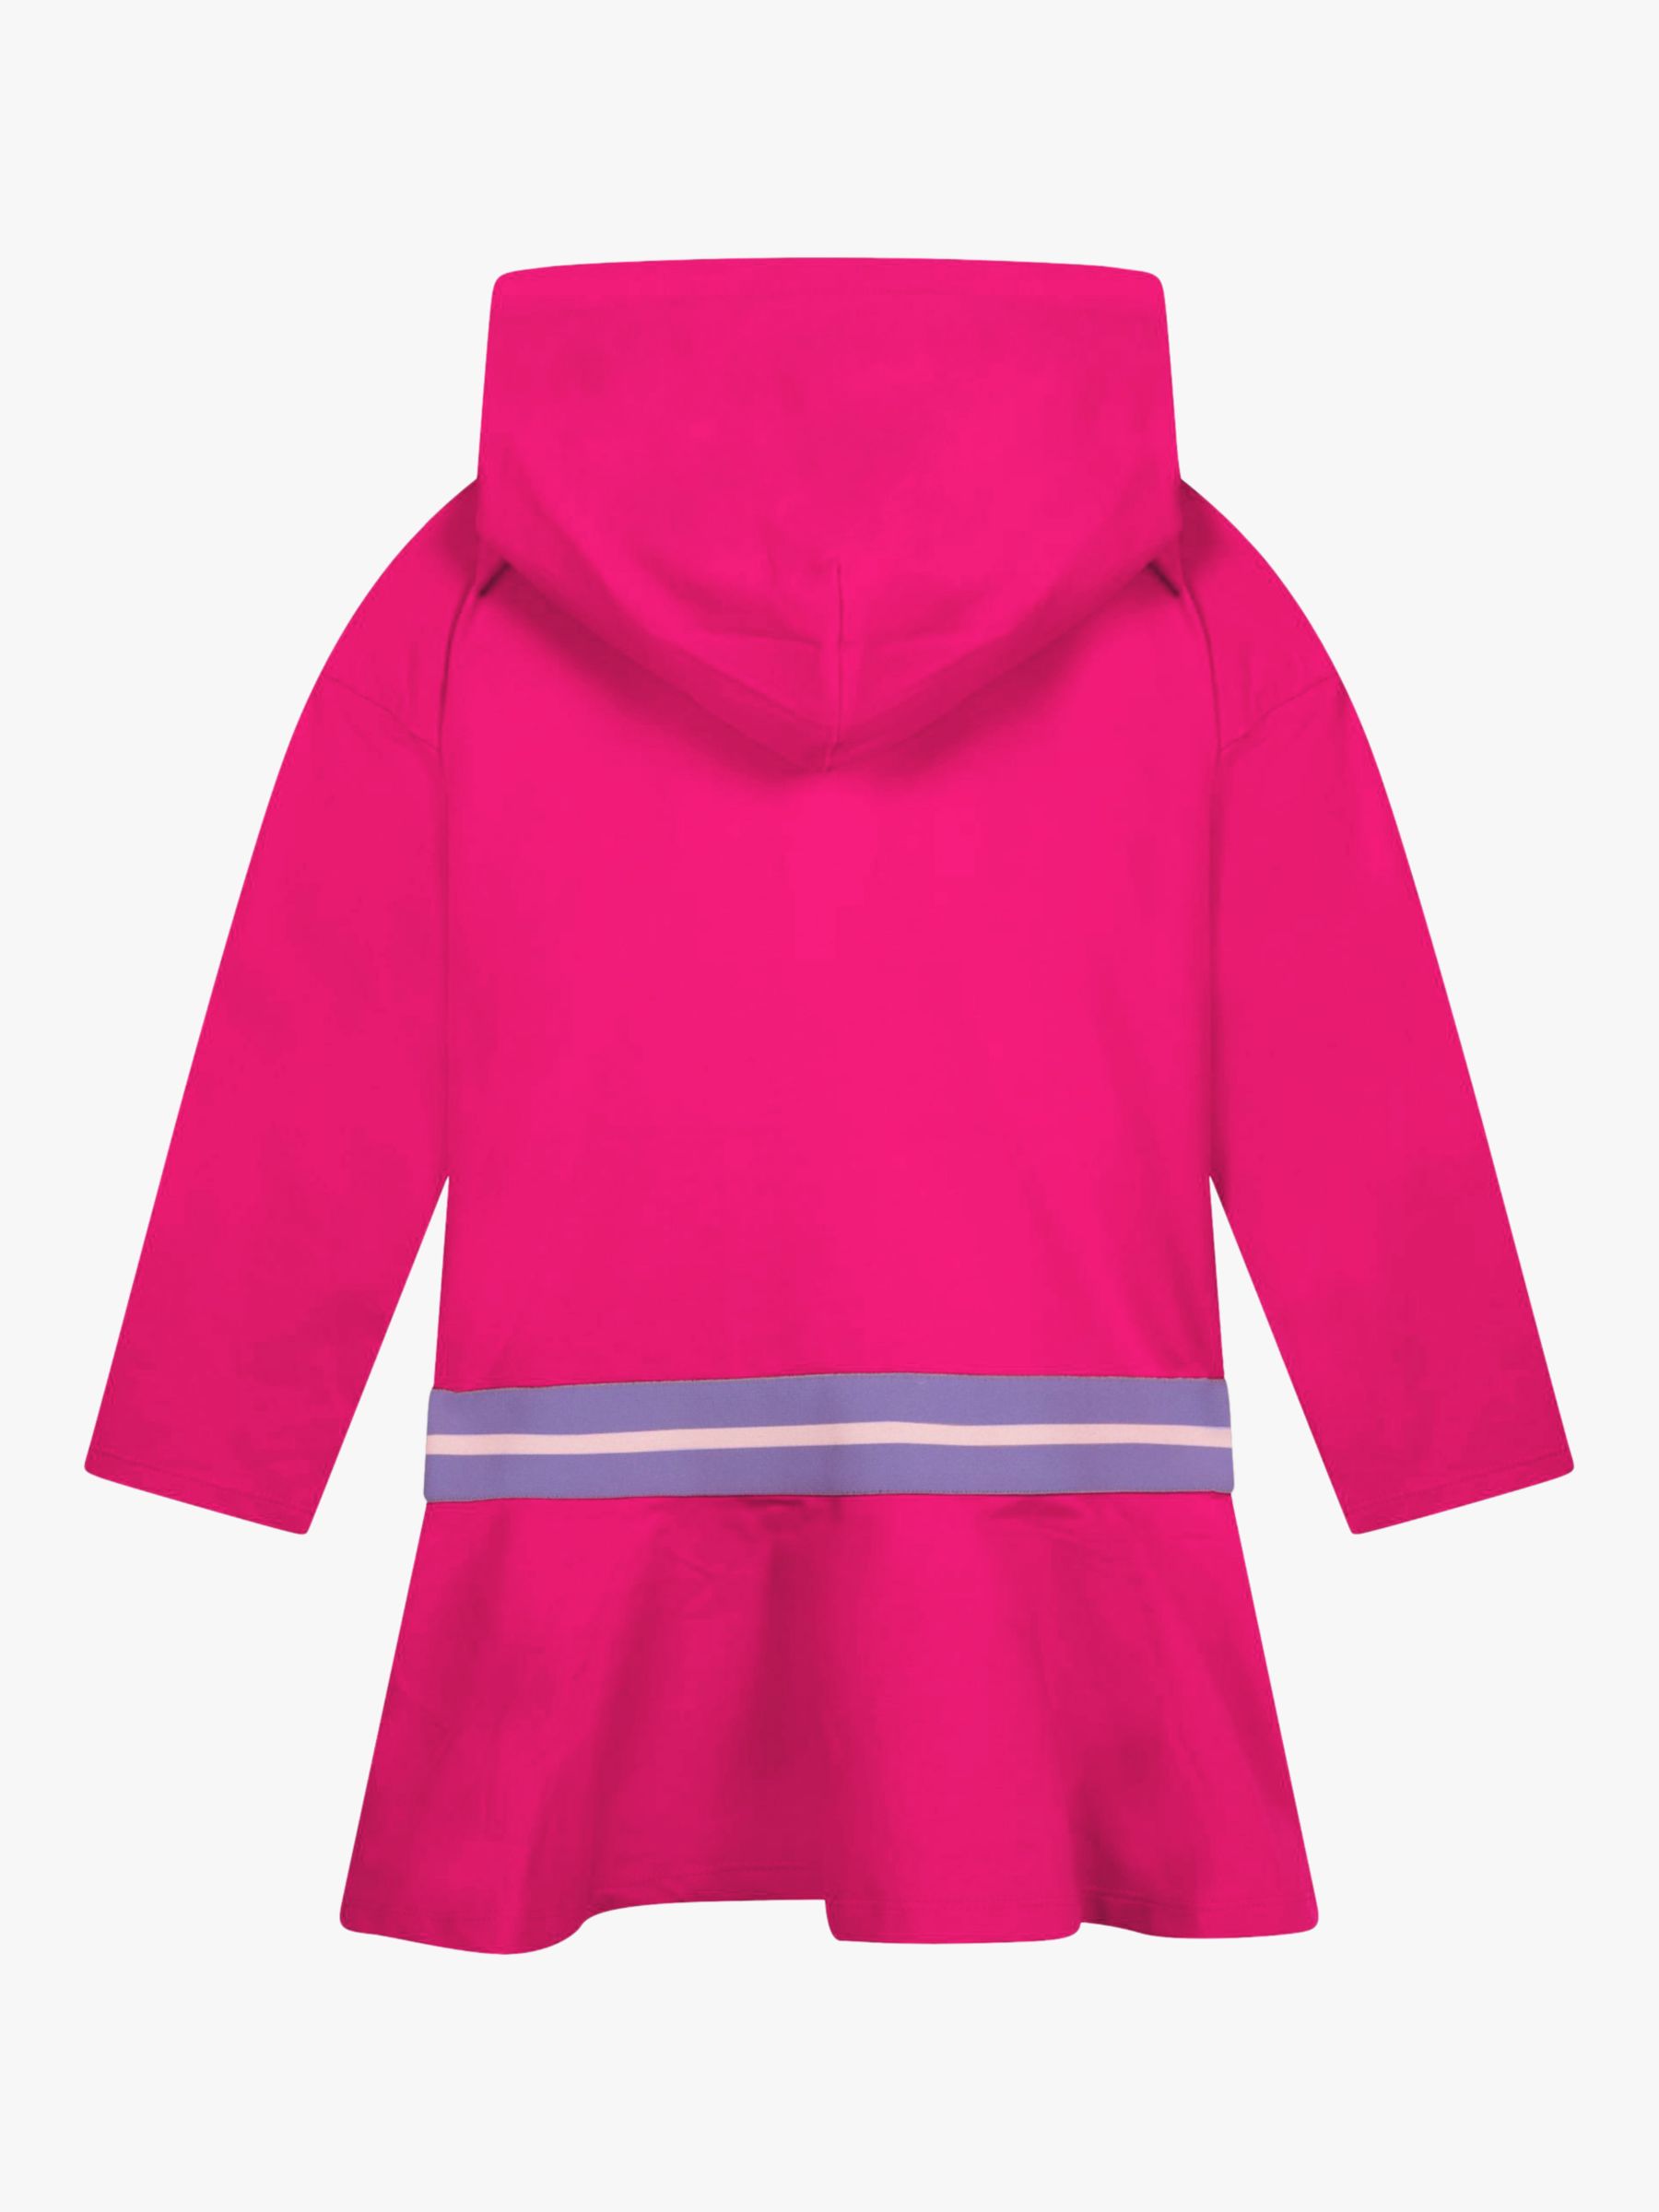 DKNY Kids' Logo Hooded Dress, Bright Pink, 14 years